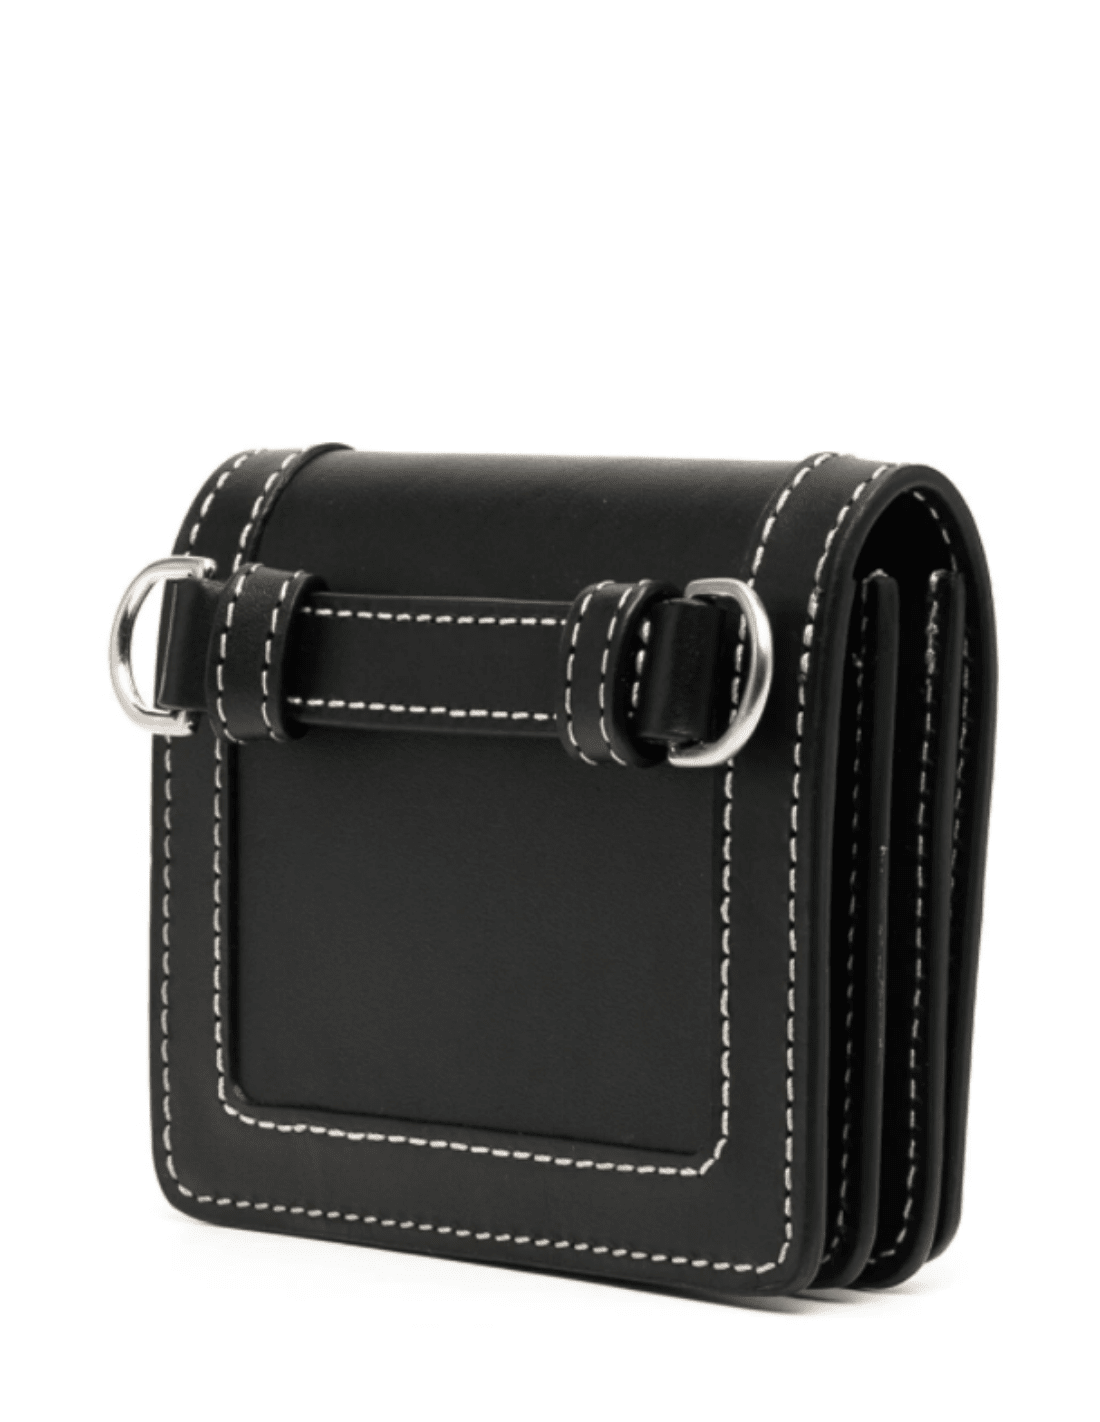 Mini AMI PARIS bag in black leather with shoulder strap - Permanent